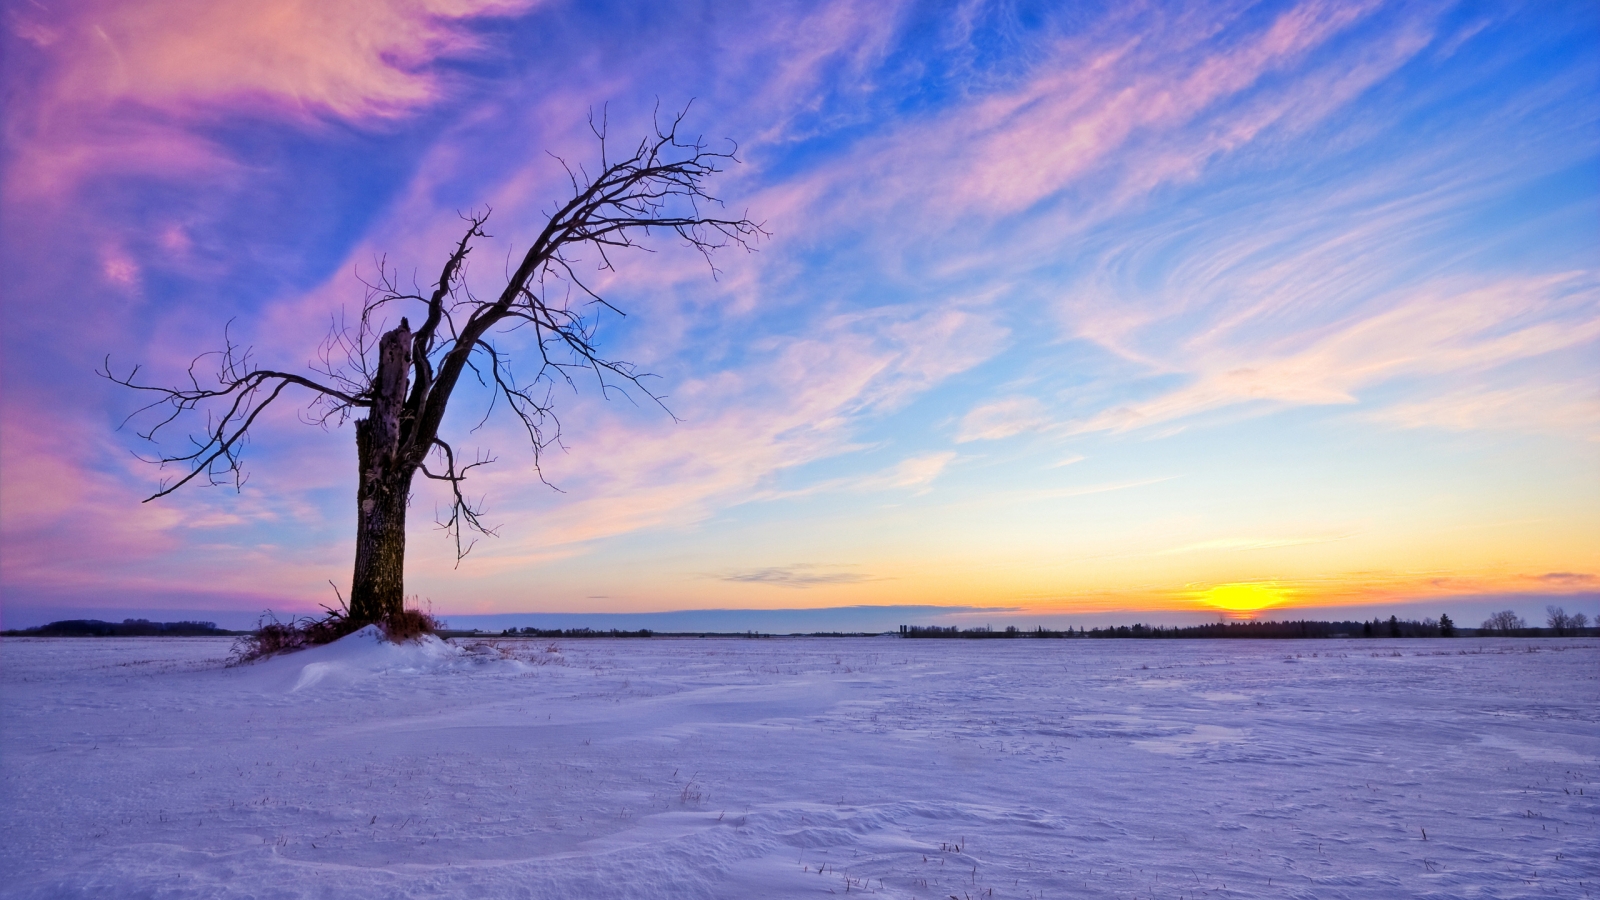 Beautiful Winter Sunset for 1600 x 900 HDTV resolution